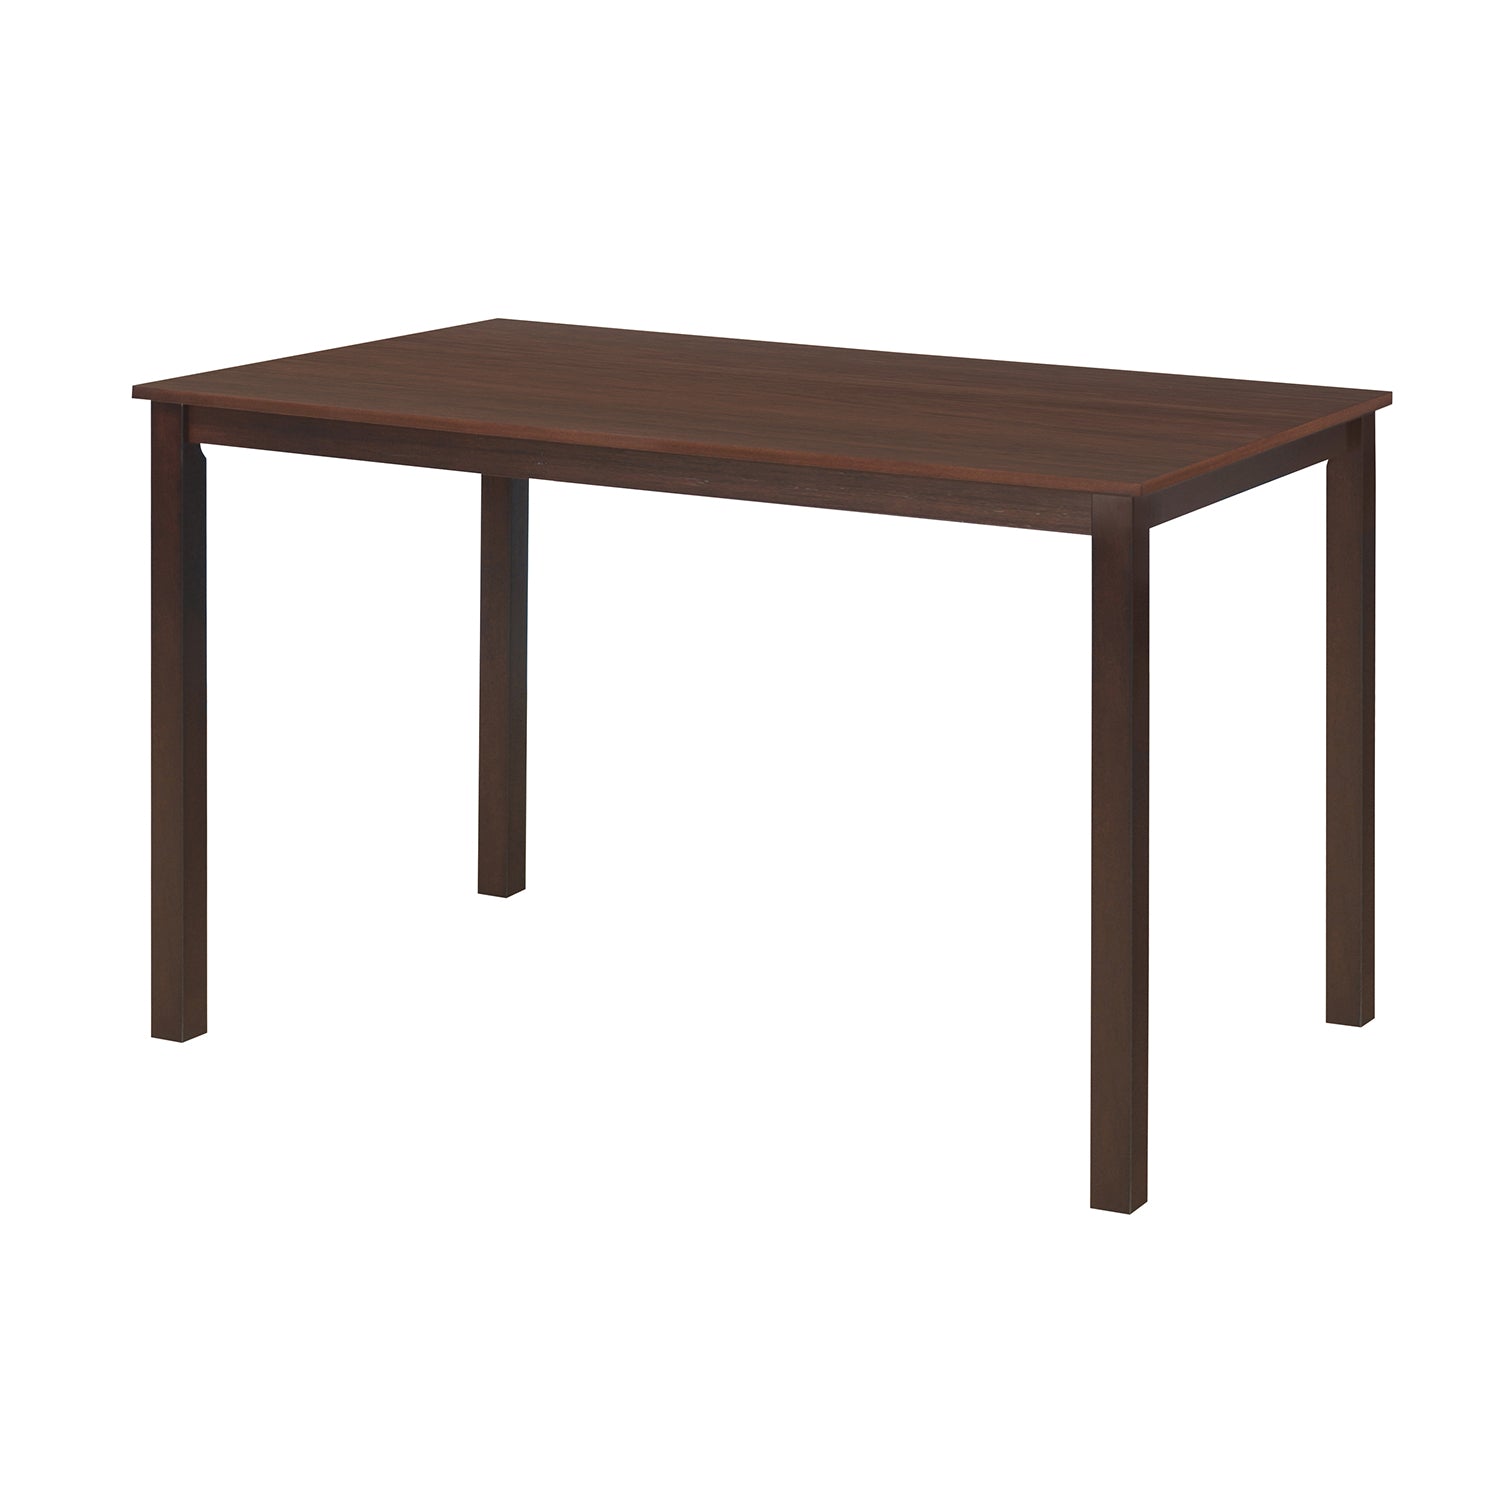 Spectrumx 4 Seater Dining Table (Oak)